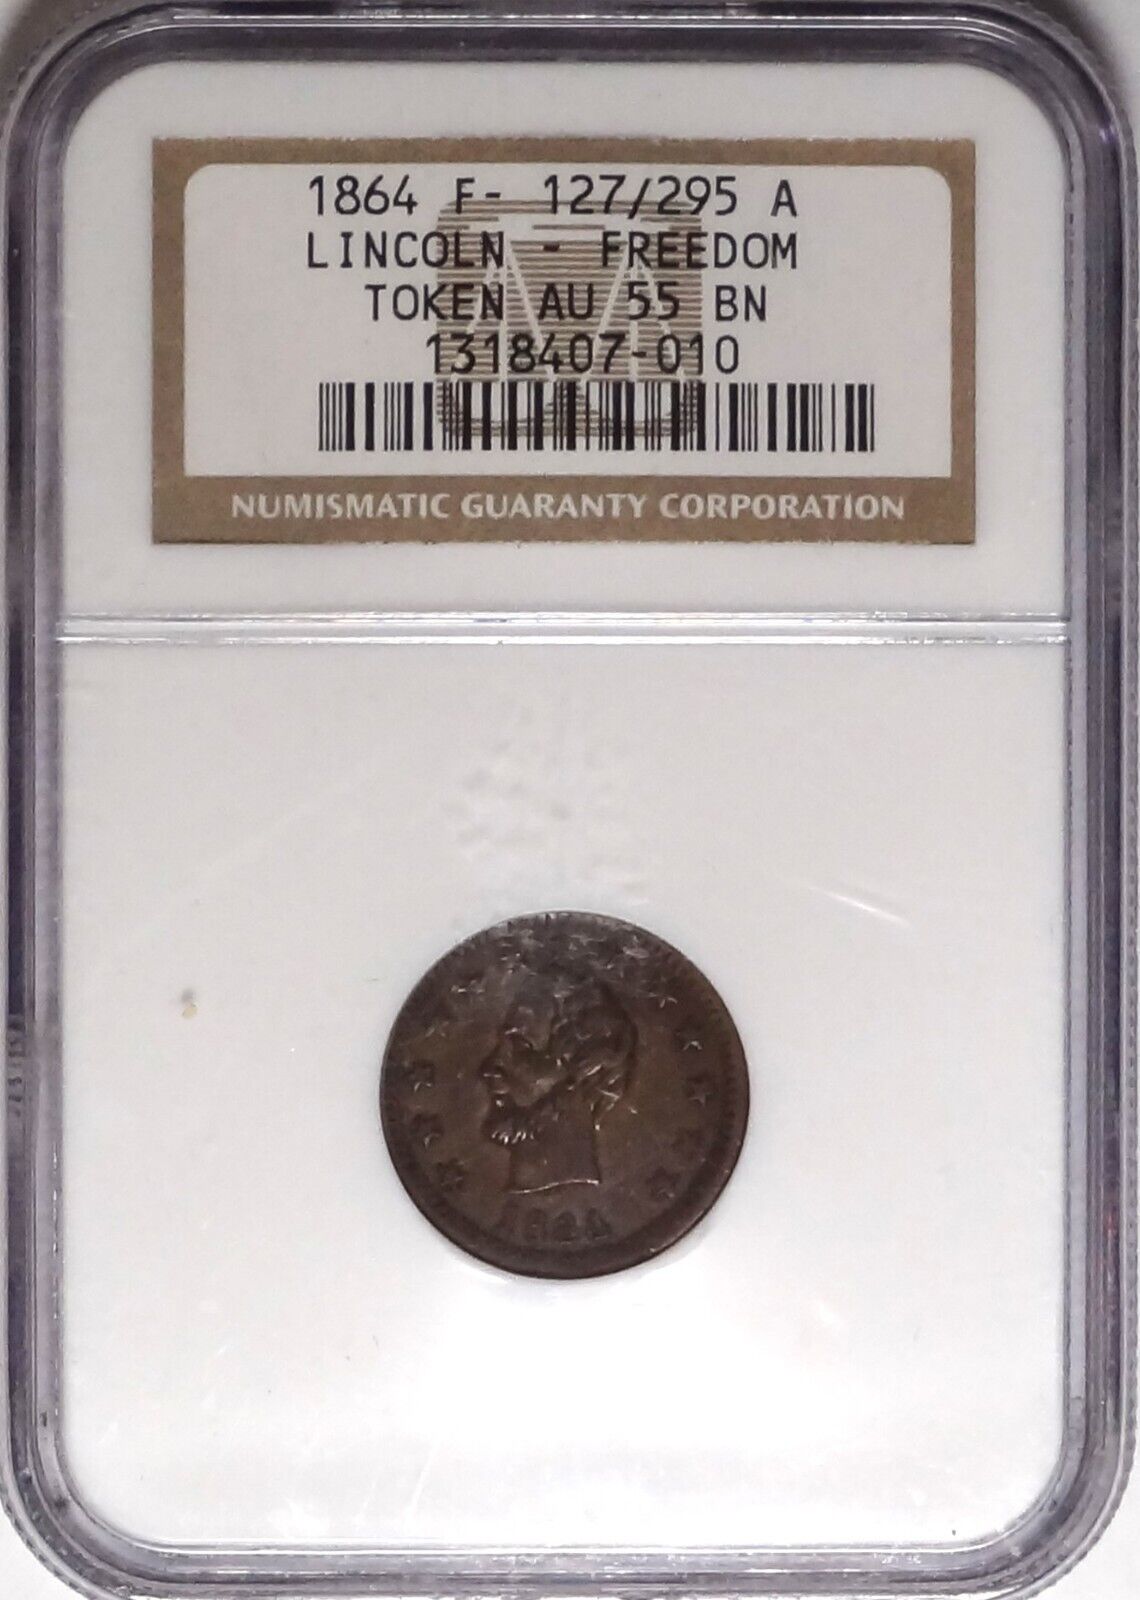 127/295 R9 Lincoln Freedom Civil War Patriotic Token NGC AU55 Dewitt AL 1864-58